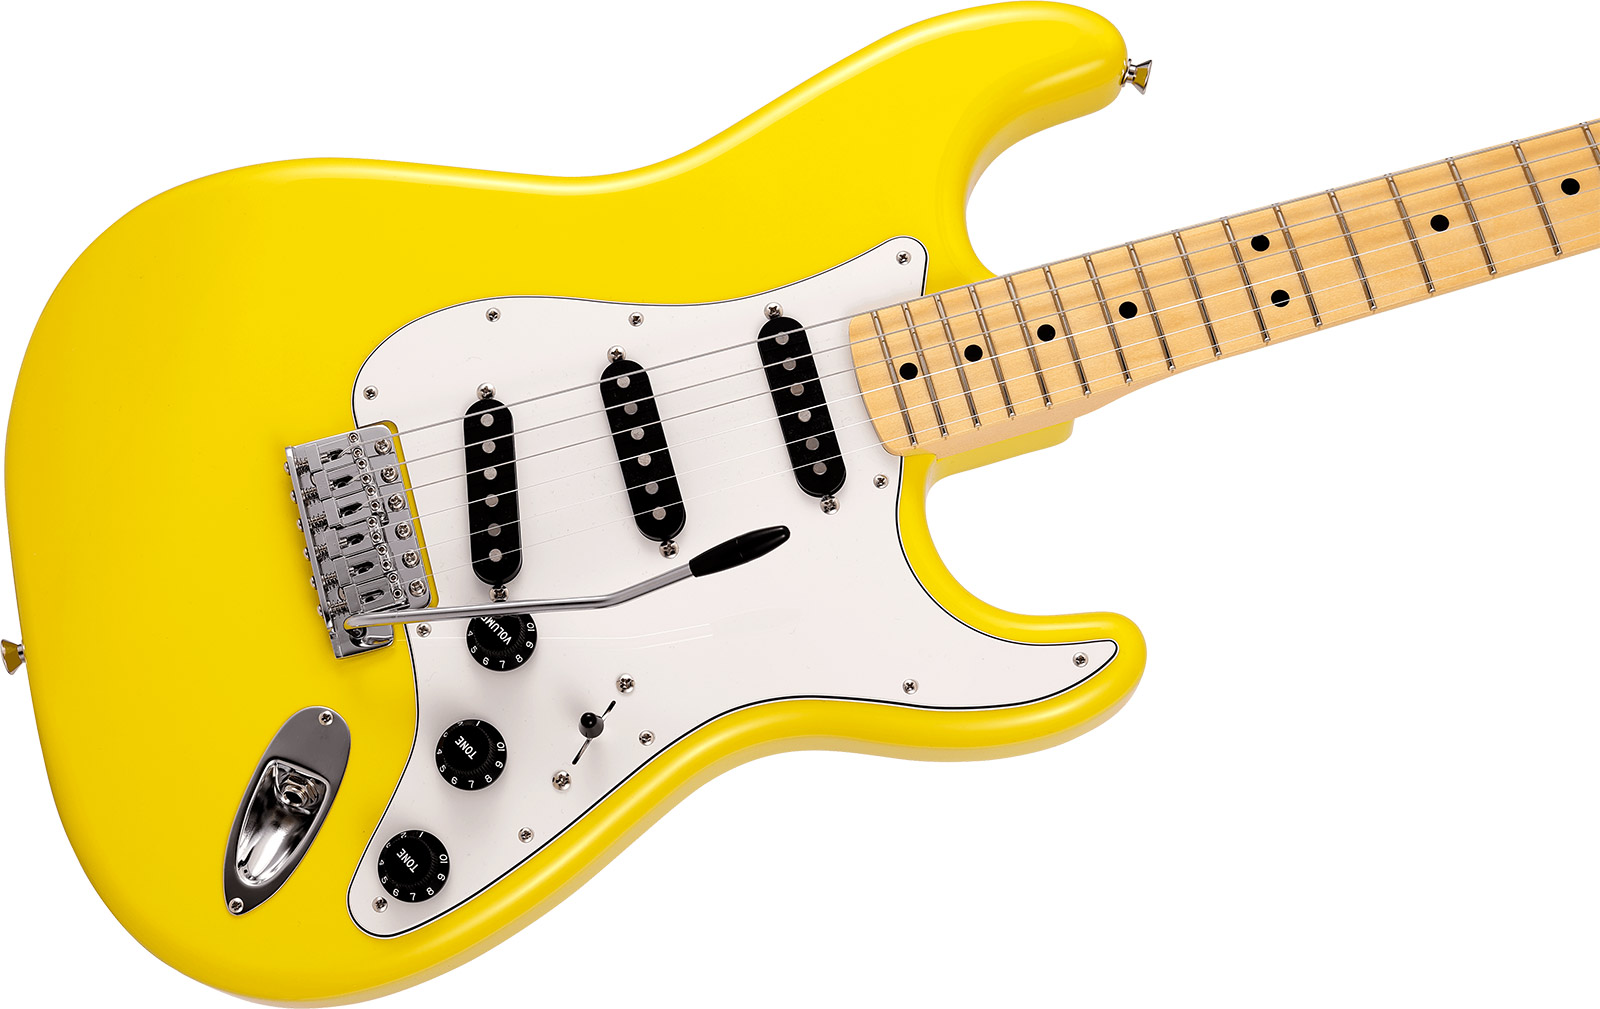 Fender Strat International Color Ltd Jap 3s Trem Mn - Monaco Yellow - Elektrische gitaar in Str-vorm - Variation 2